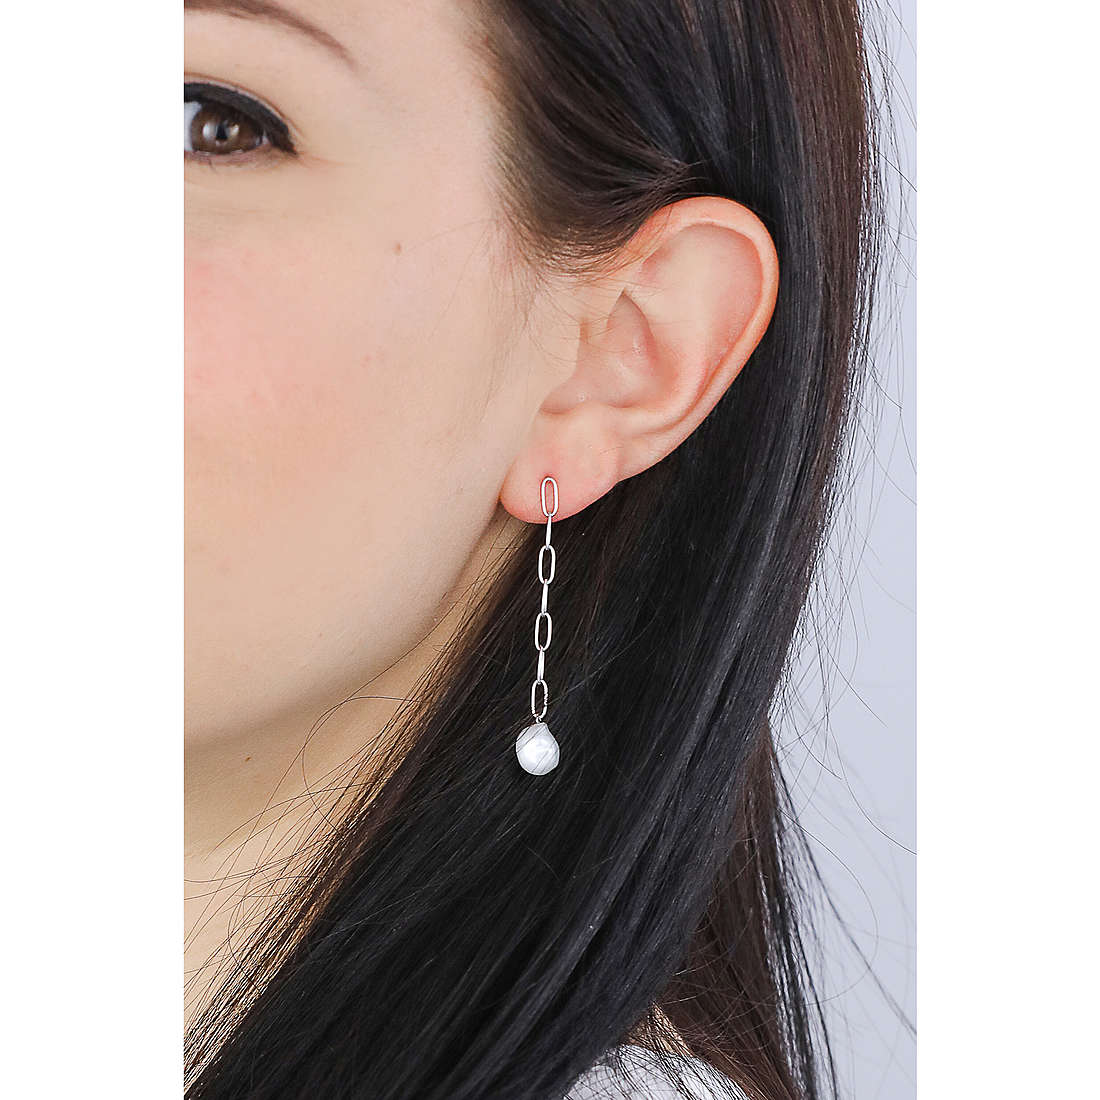 Ania Haie earrings Pearl Of Wisdom woman E019-05H wearing